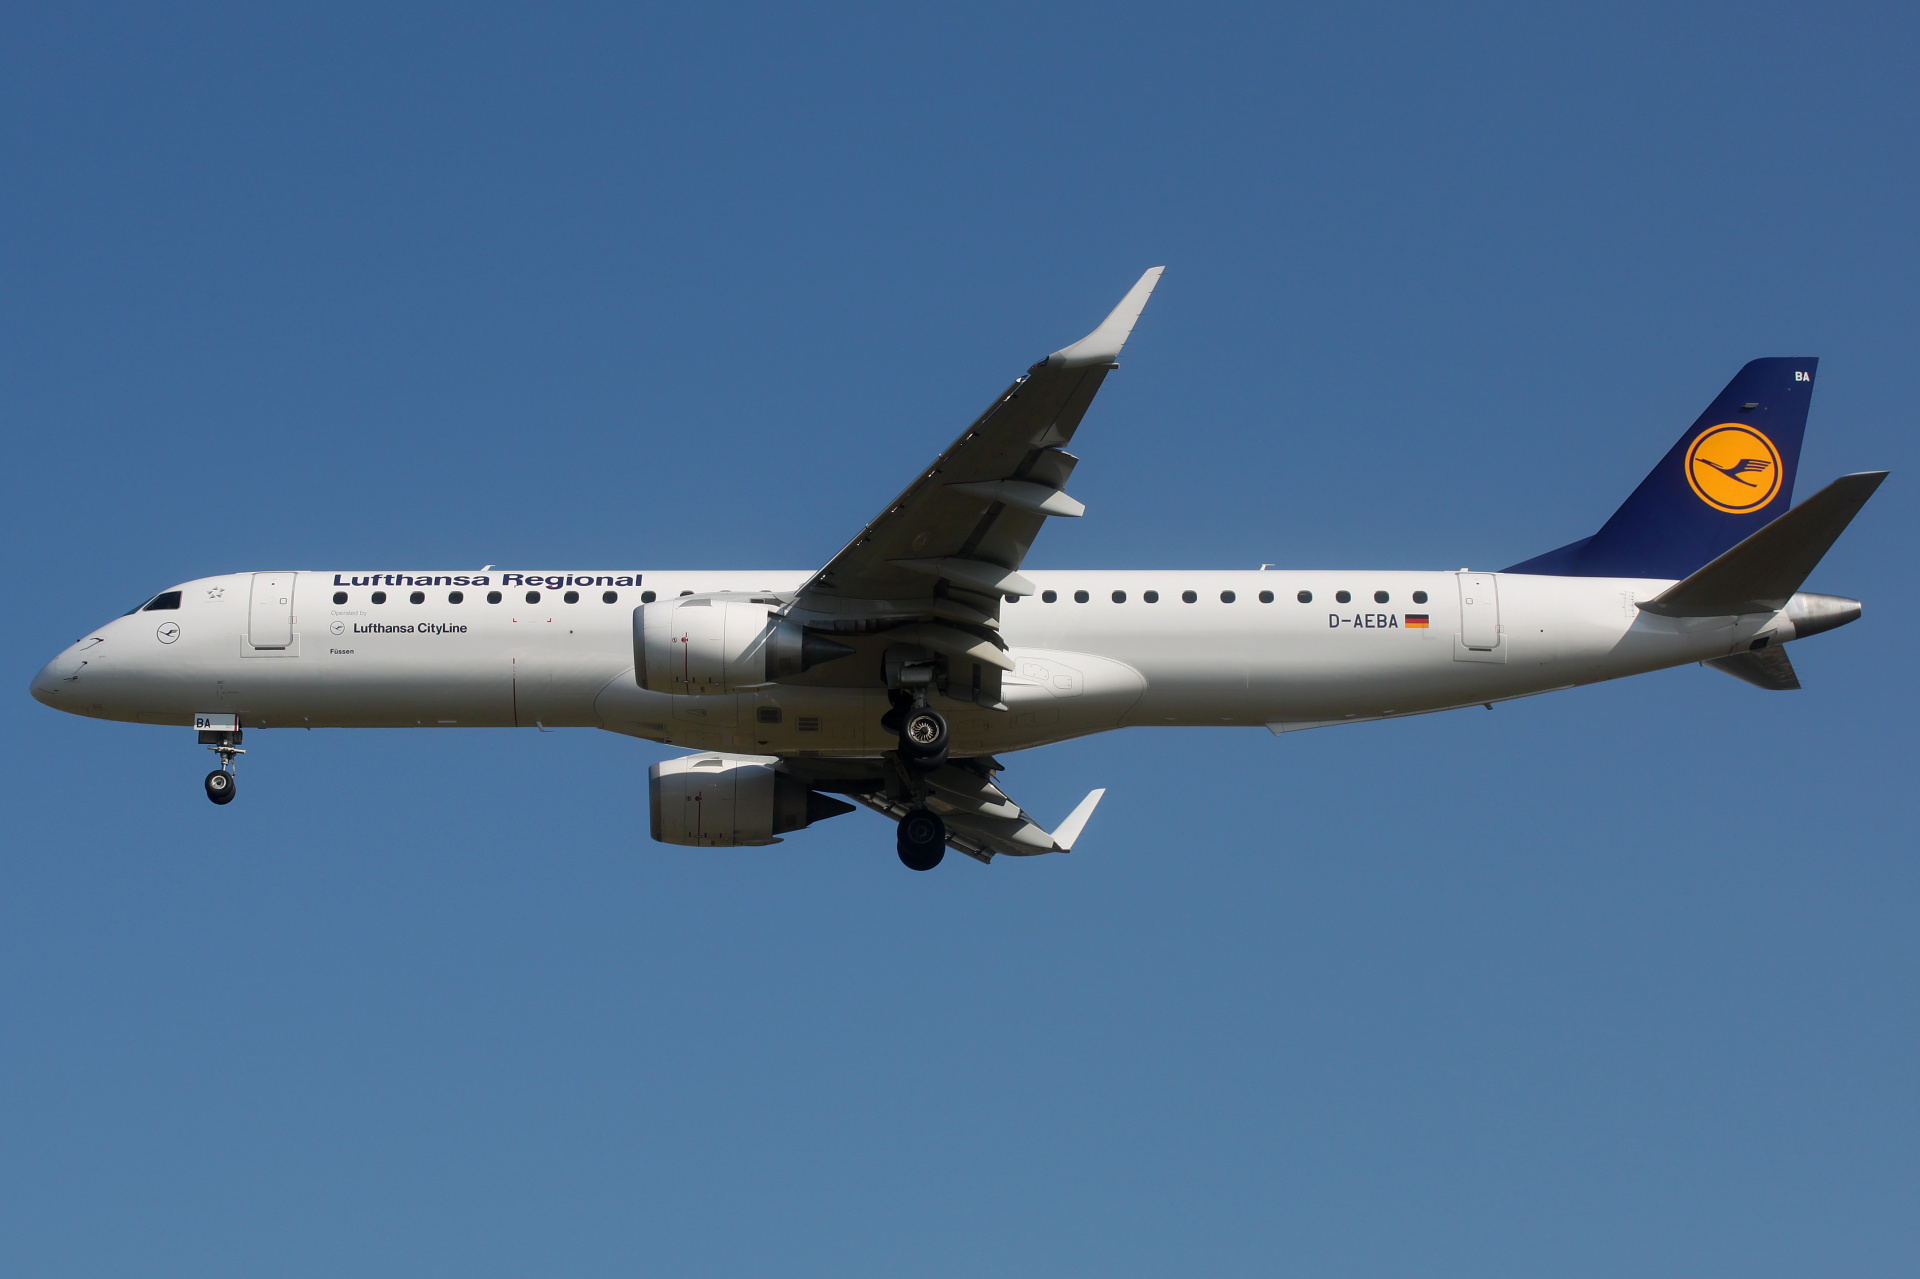 D-AEBA (Lufthansa CityLine) (Aircraft » EPWA Spotting » Embraer E195 » Lufthansa Regional)